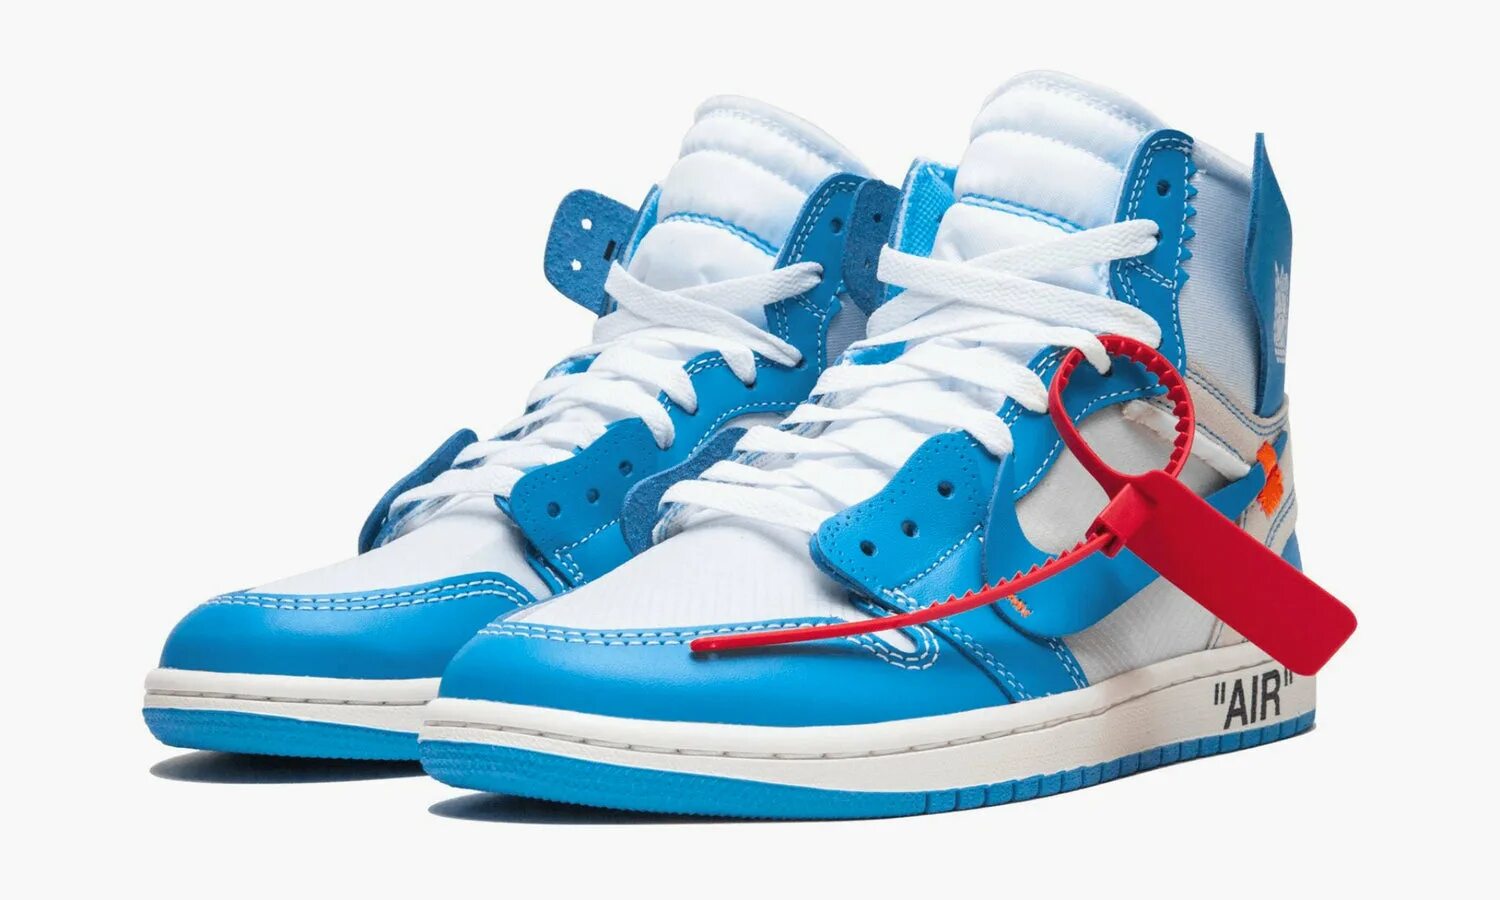 Nike Air Jordan 1 off White. Nike Air Jordan 1 Blue White. Nike Jordan 1 off White. Nike Air Jordan 1 High off White Blue.